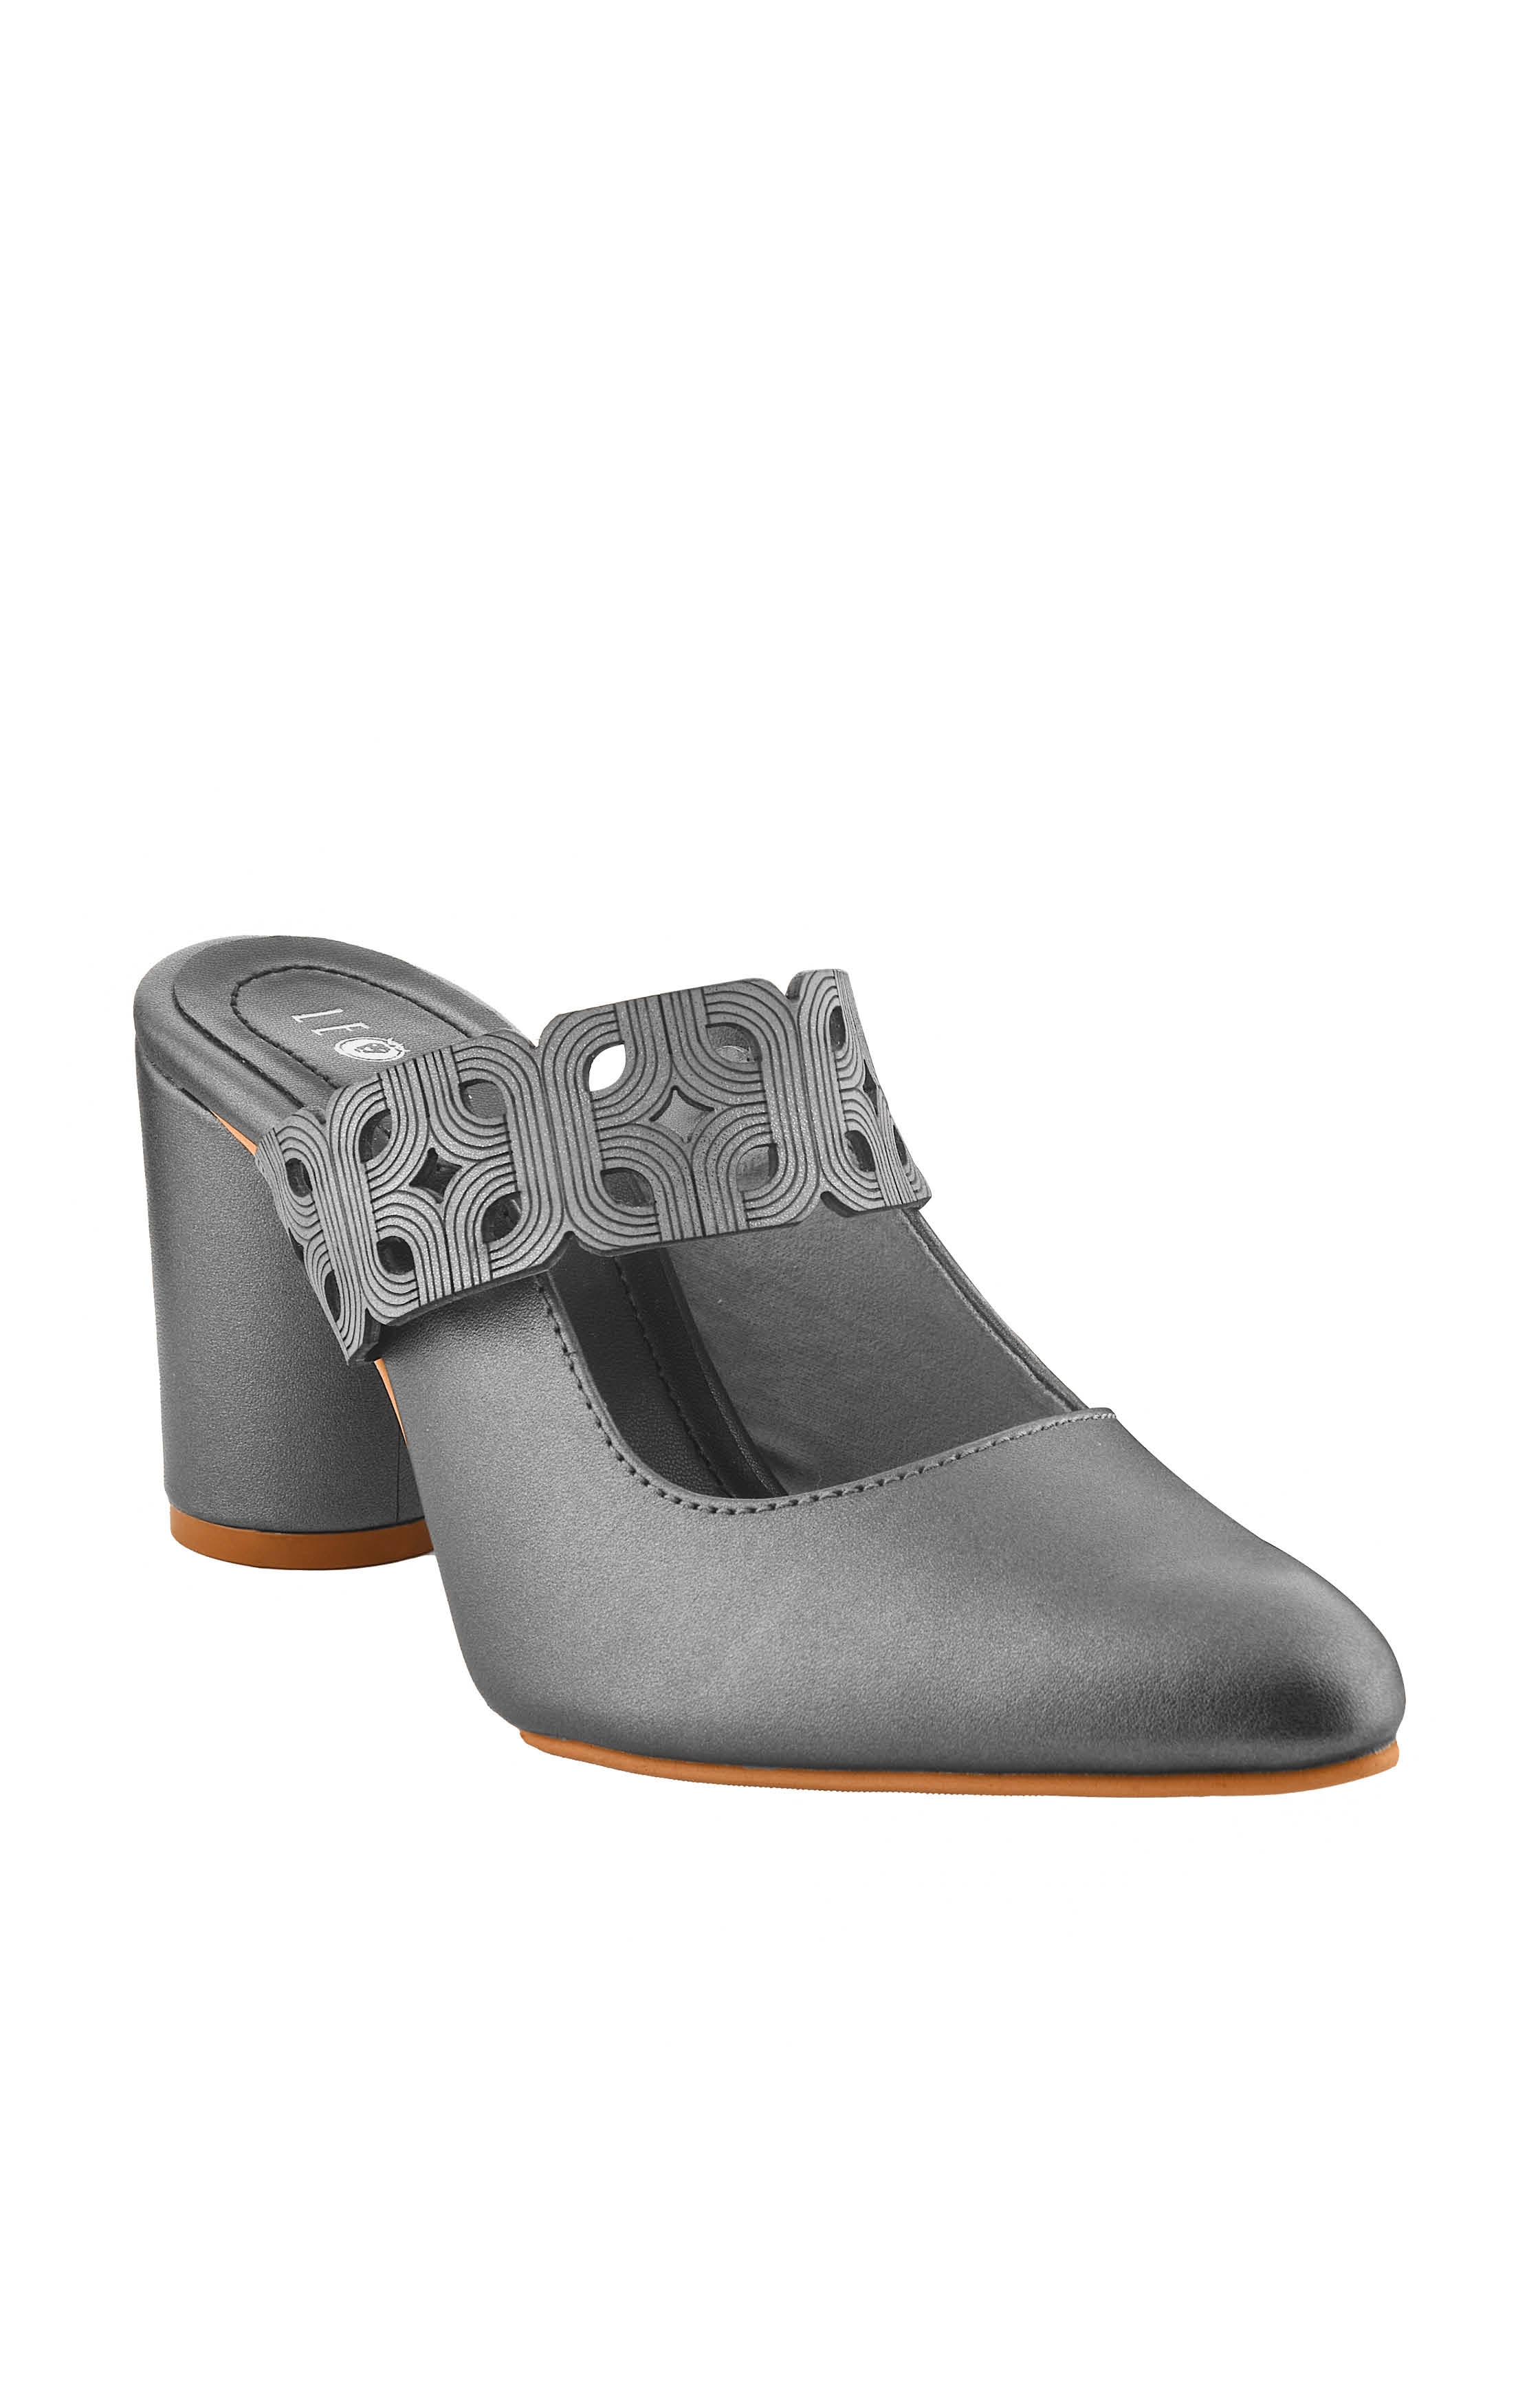 Point Toe Block Heels - Grey